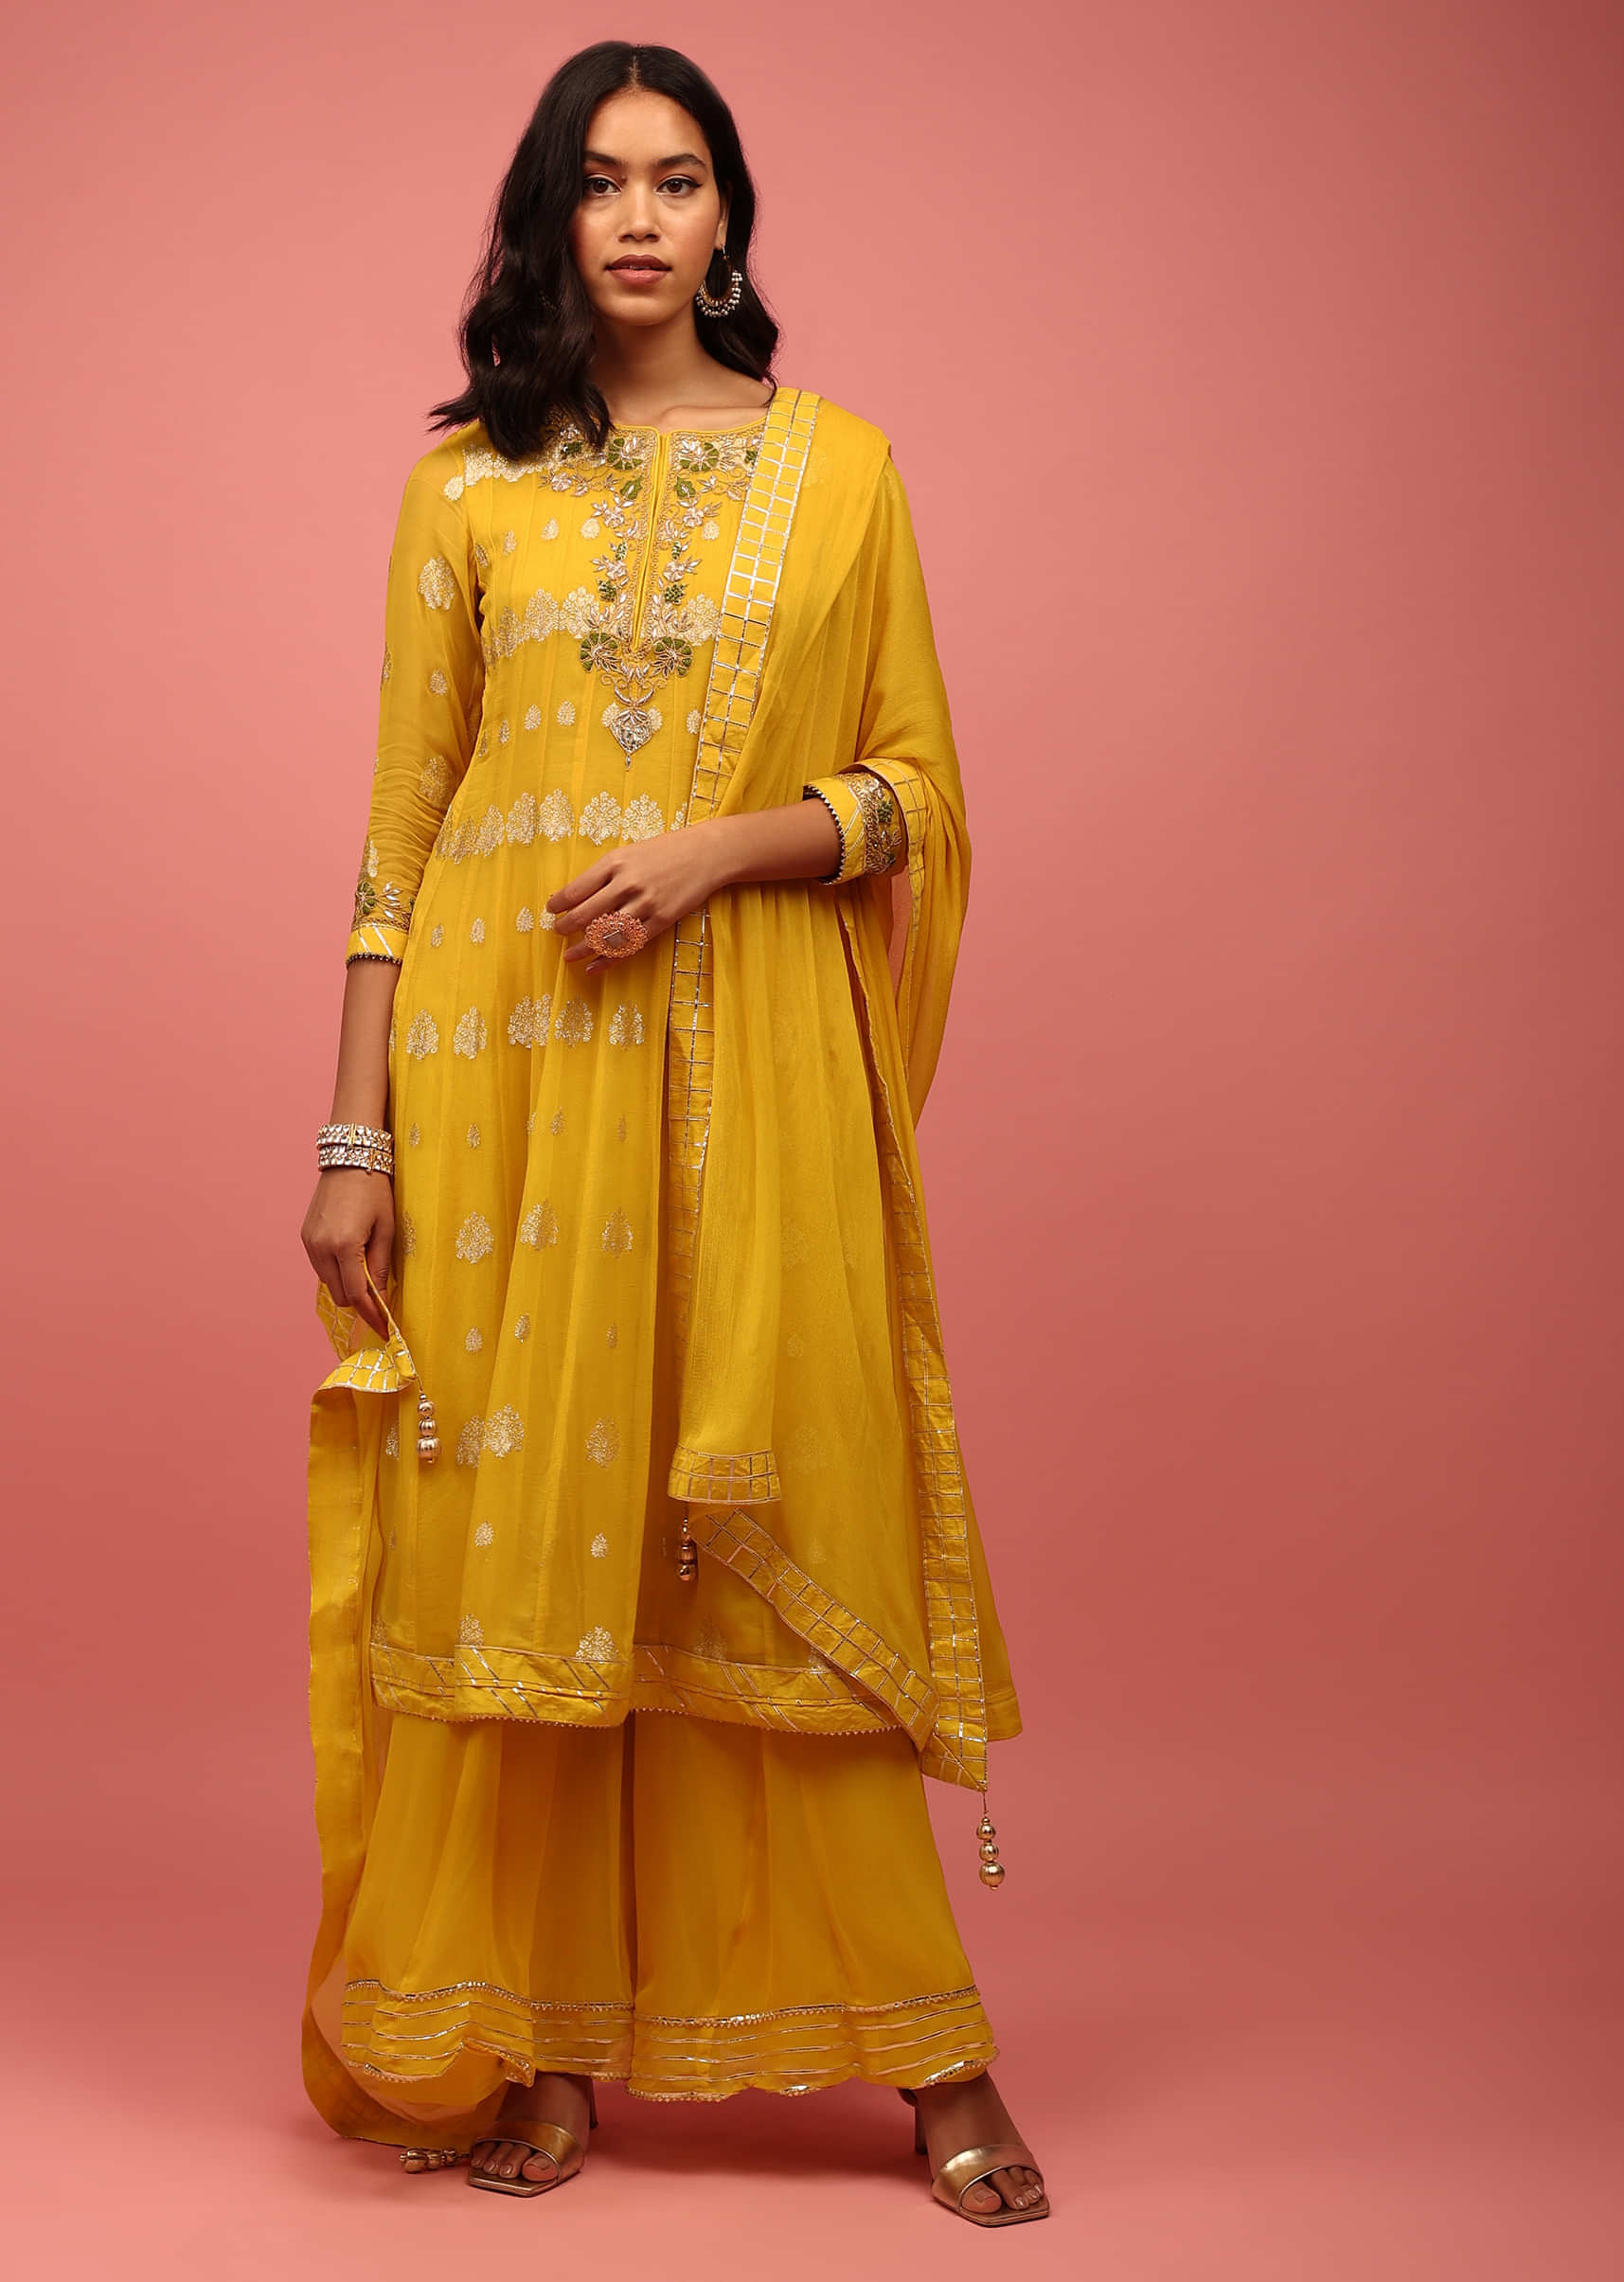 Chrome Yellow Anarkali Suit Set In Banarasi Georgette, Embellished With Brocade And Zardosi Work